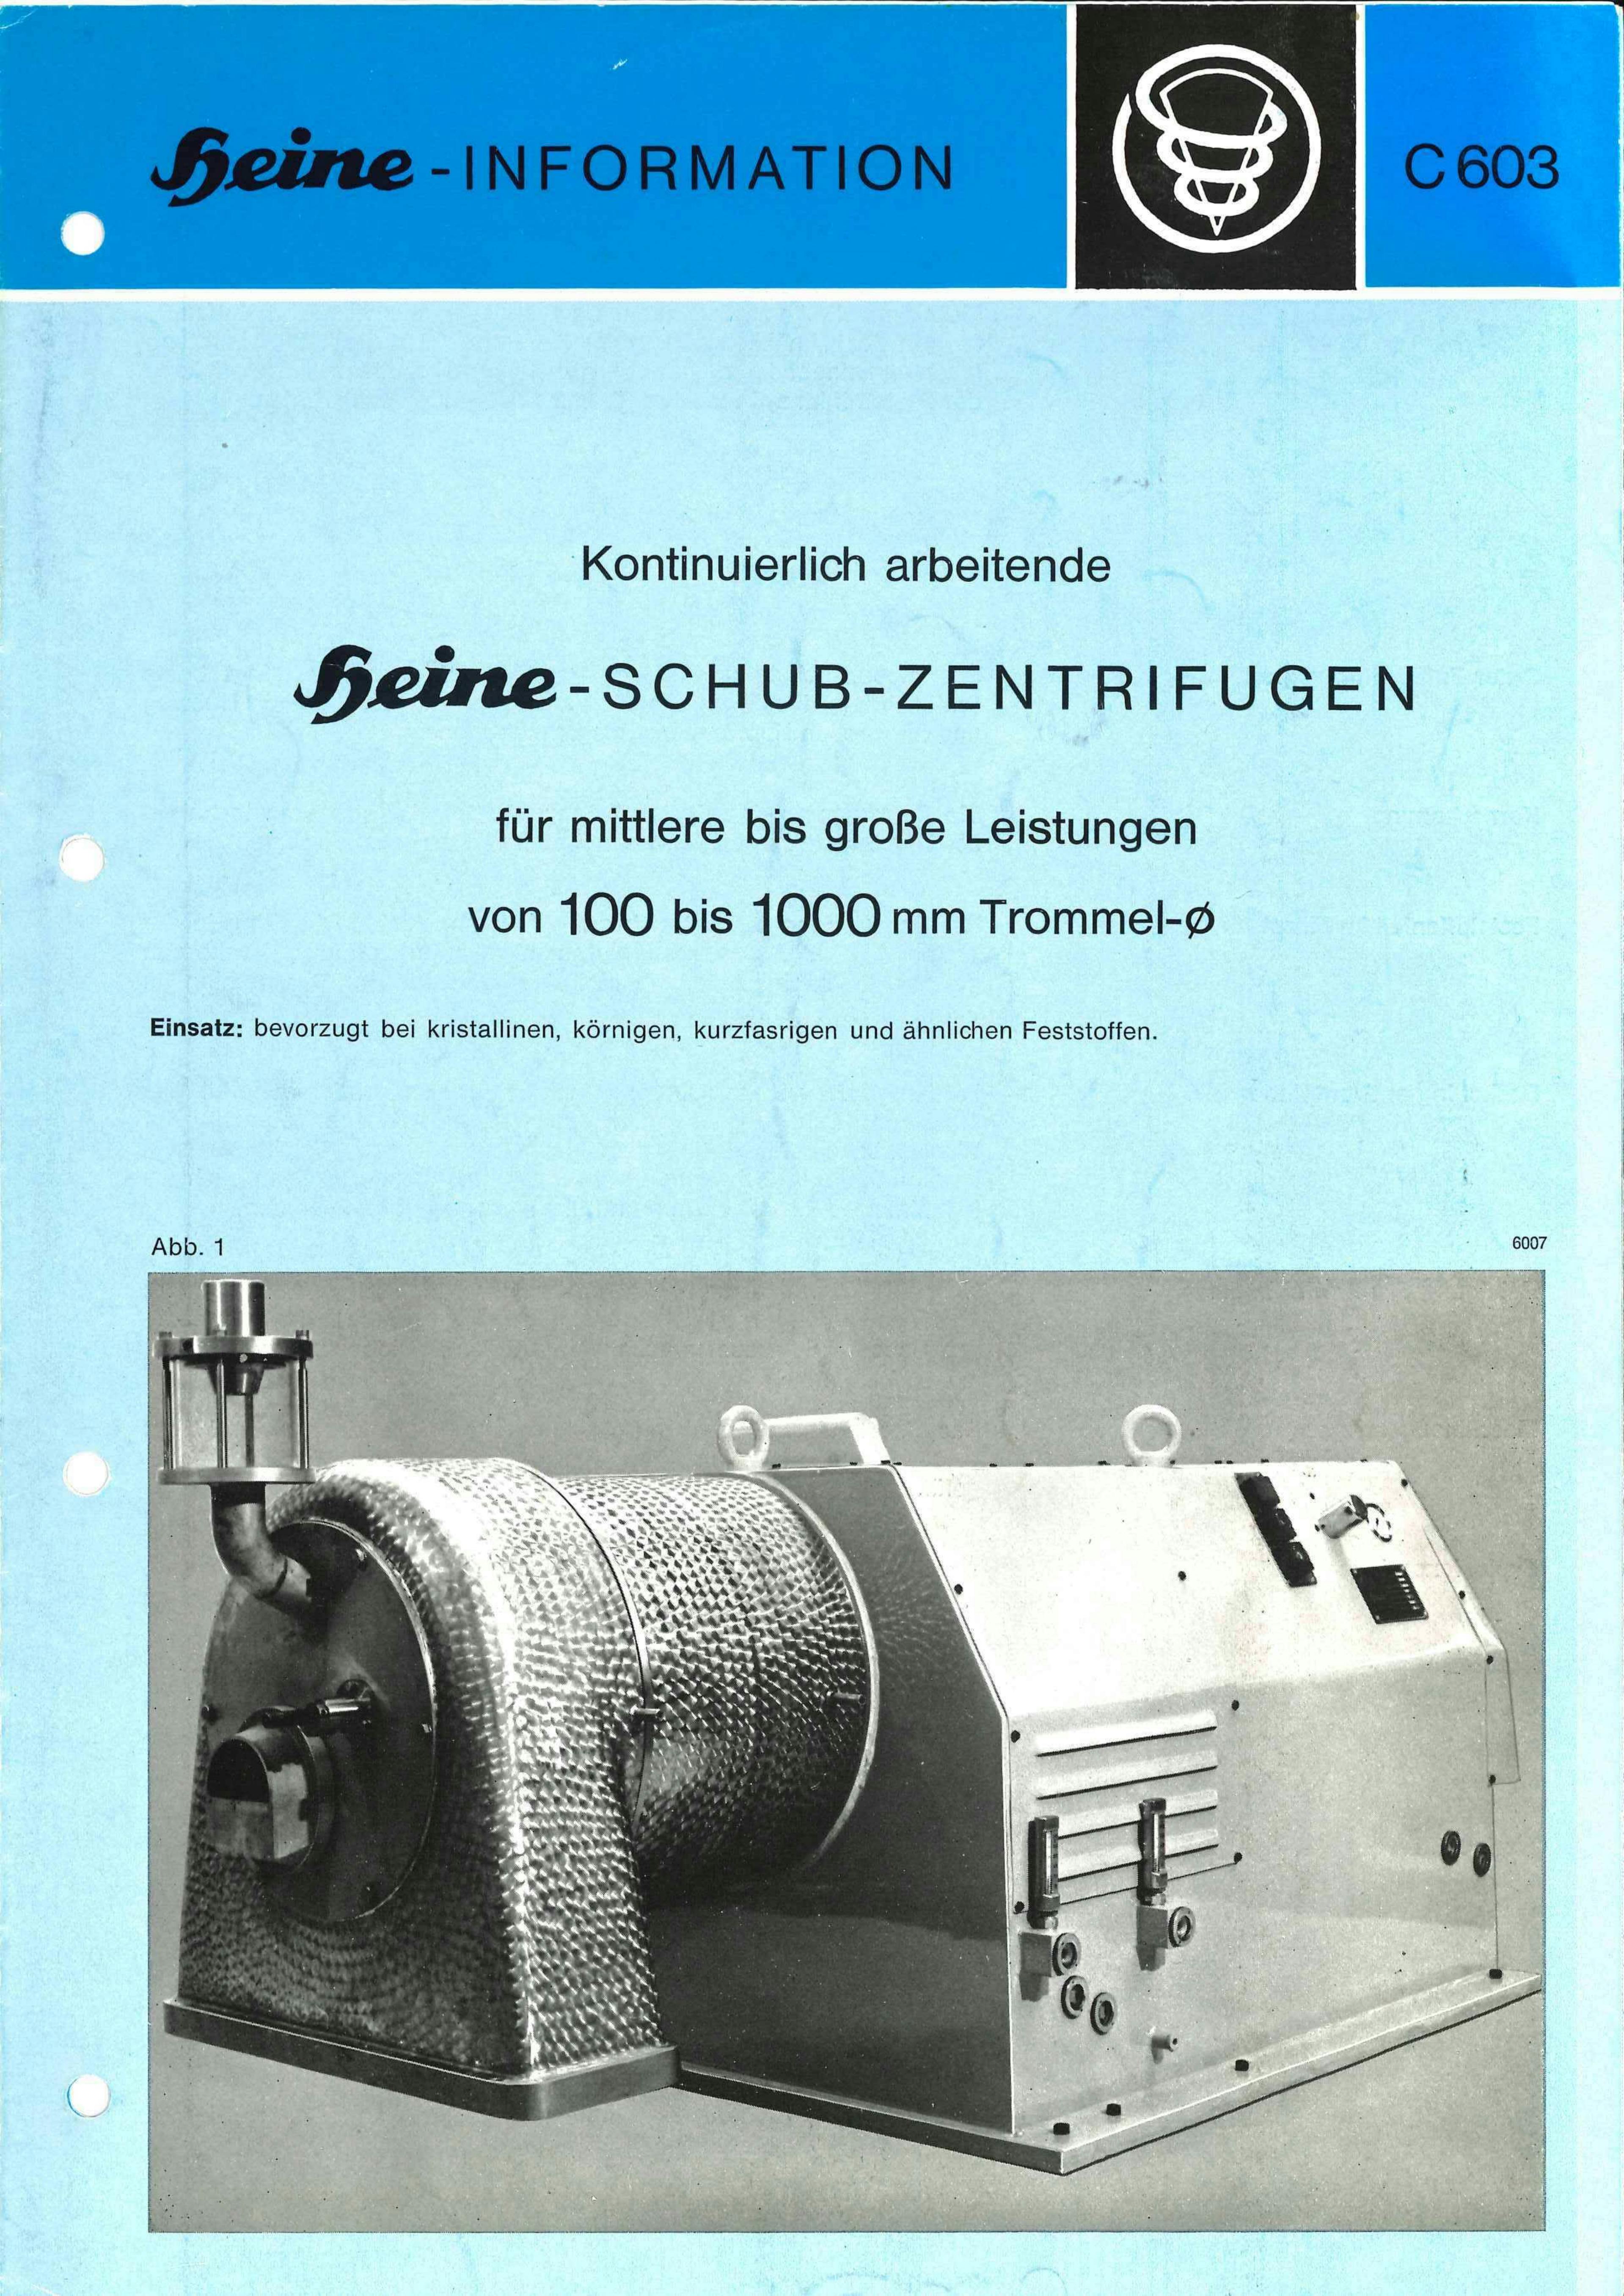 Heine Zentrifug 606 - Schuifcentrifuge - image 12